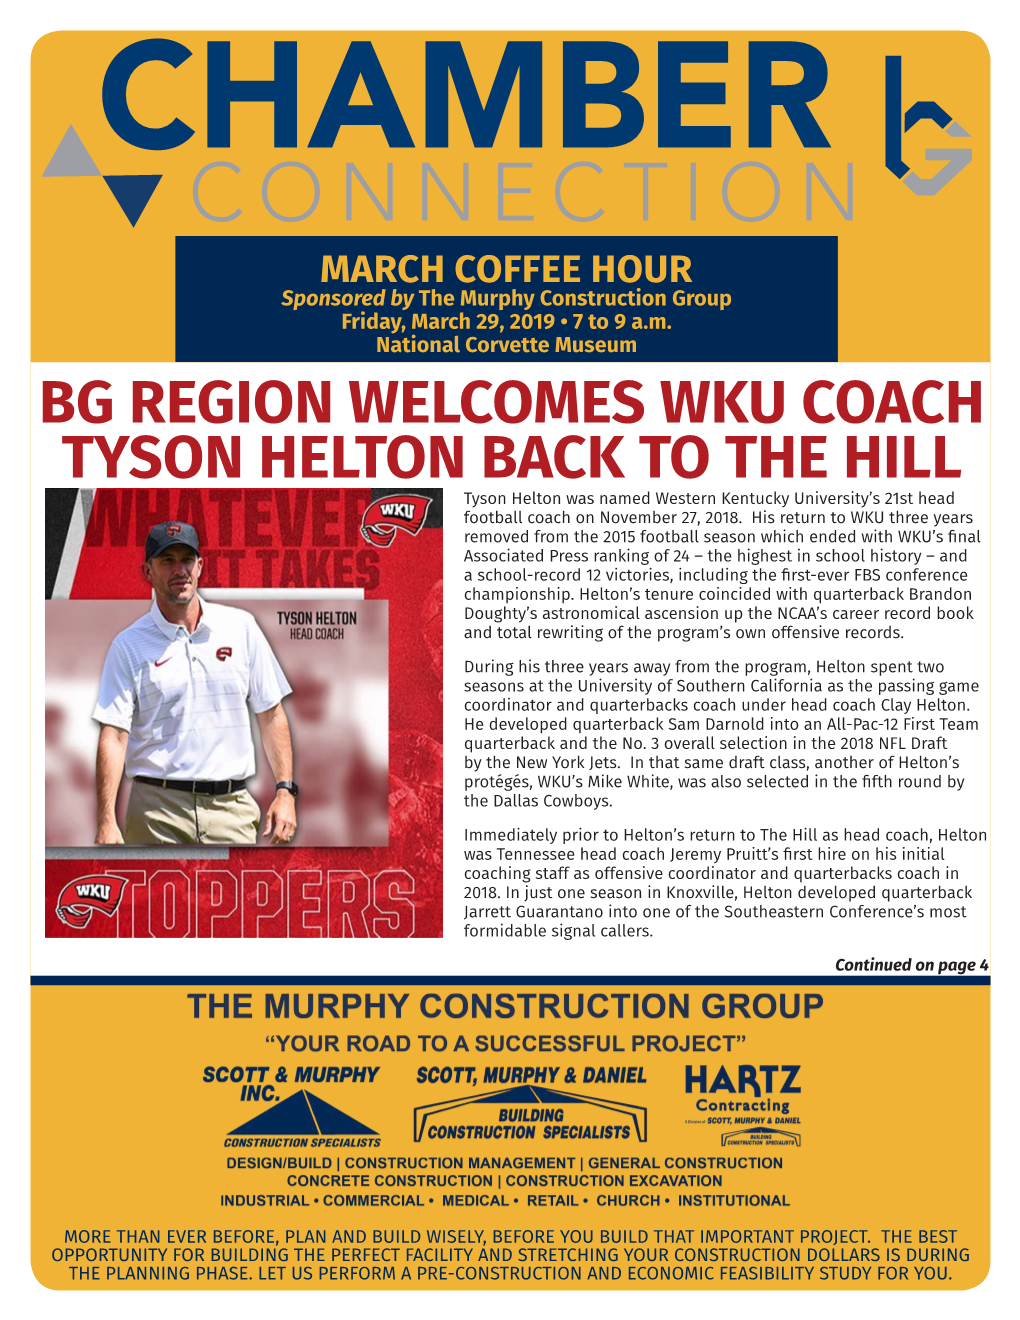 BG REGION WELCOMES WKU COACH TYSON HELTON BACK to the HILL Tyson Helton Was Named Western Kentucky University’S 21St Head Football Coach on November 27, 2018